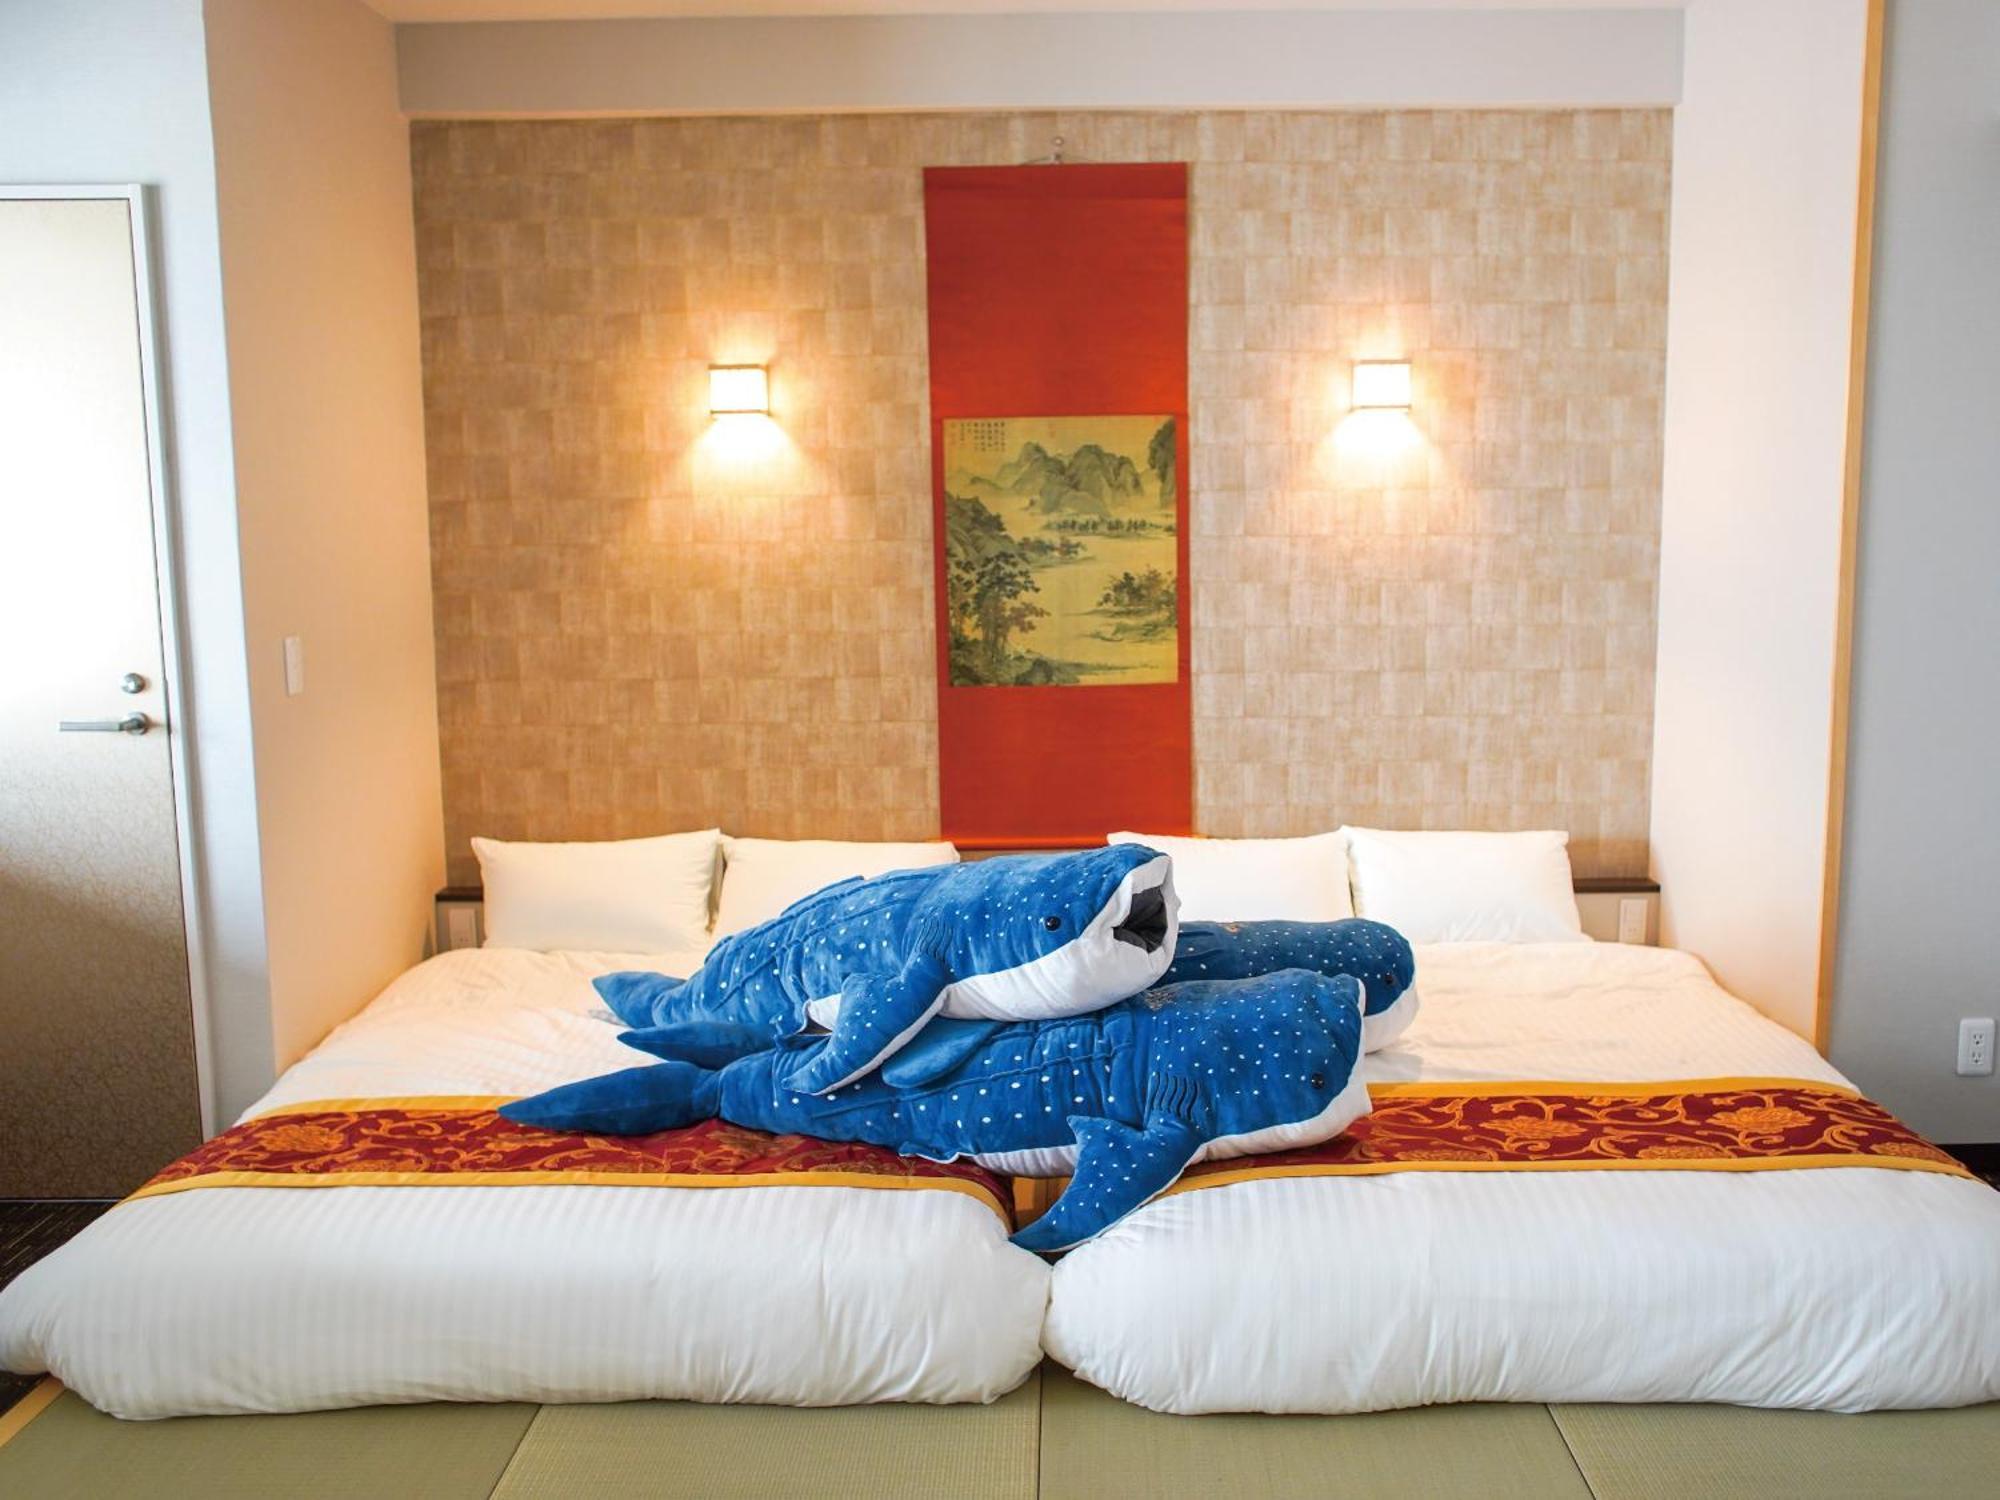 Hotel Chula Vista Senaga -Seven Hotels And Resorts- Naha Extérieur photo